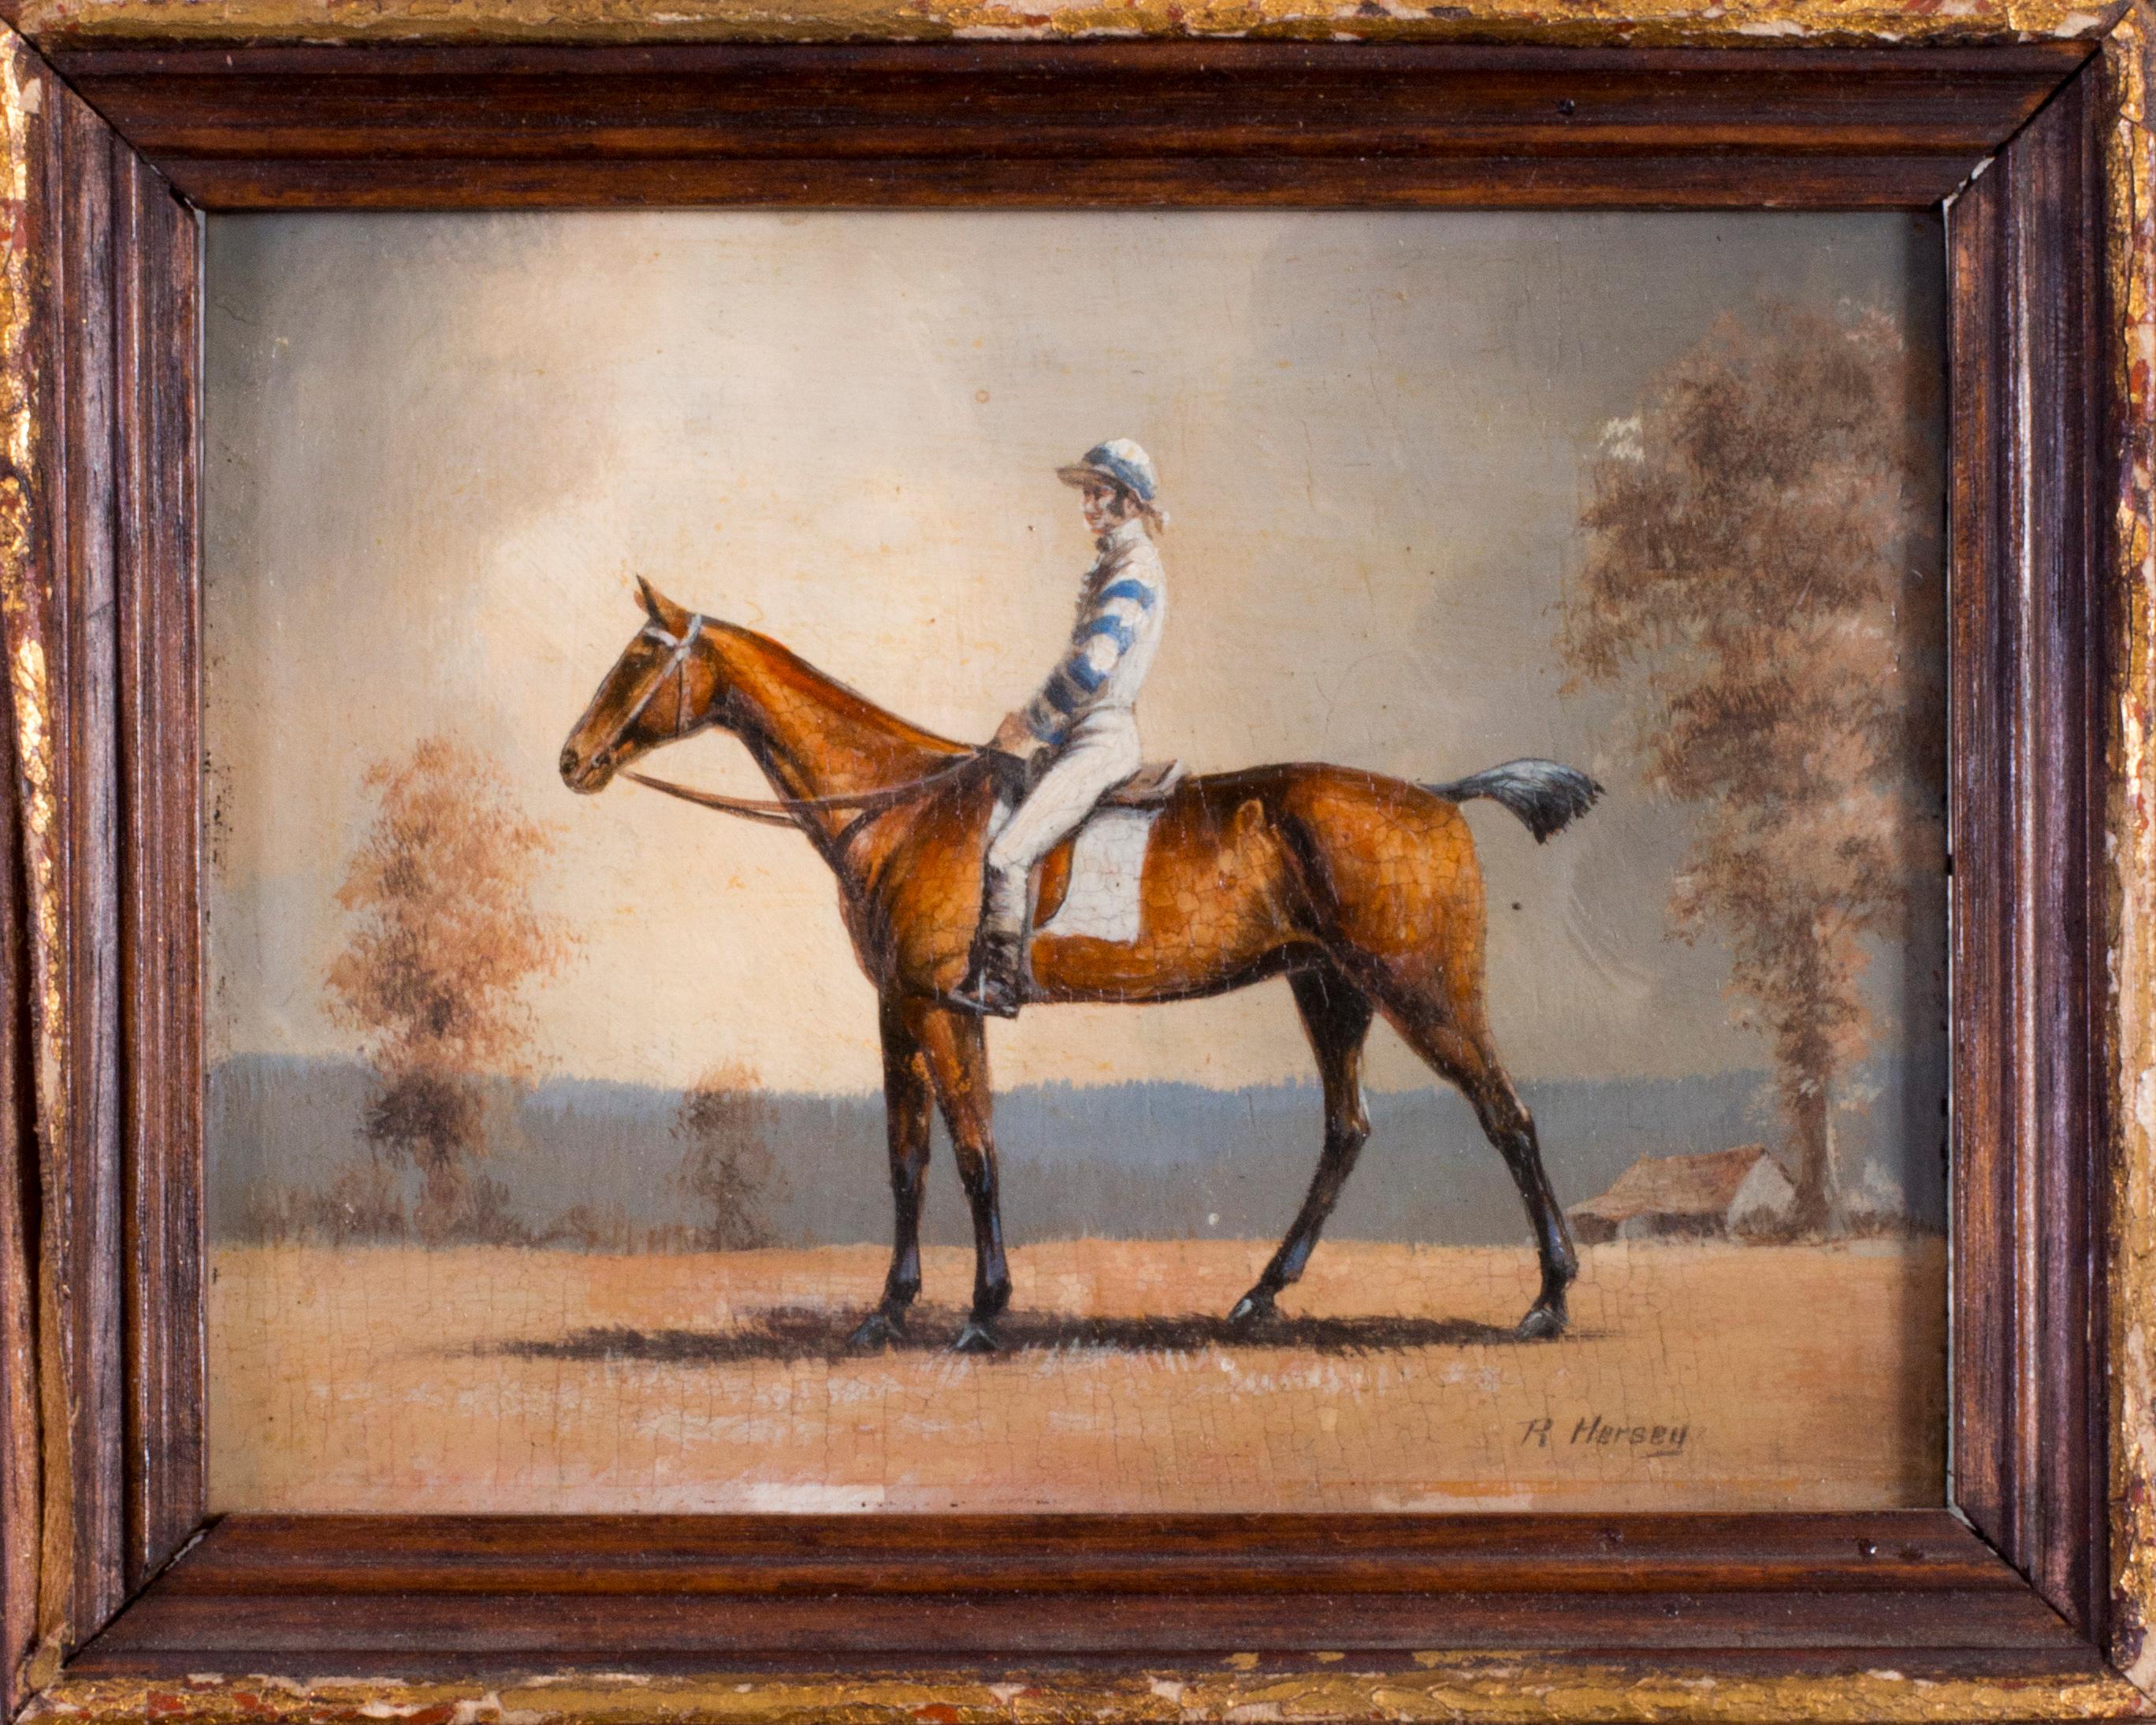 Bob Hersey Animal Painting - Jockeys and their mount (set of 4 miniature oil paintings of jockeys and horses)